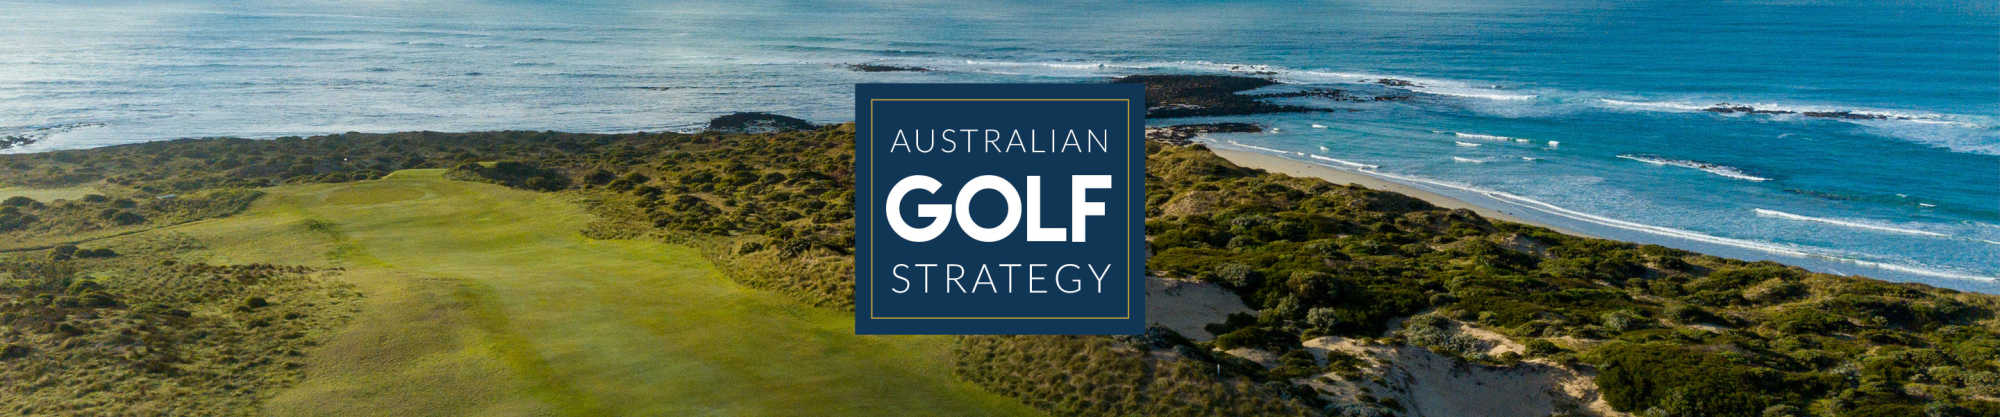 Australian Golf Strategy (Photo: Brendan James)